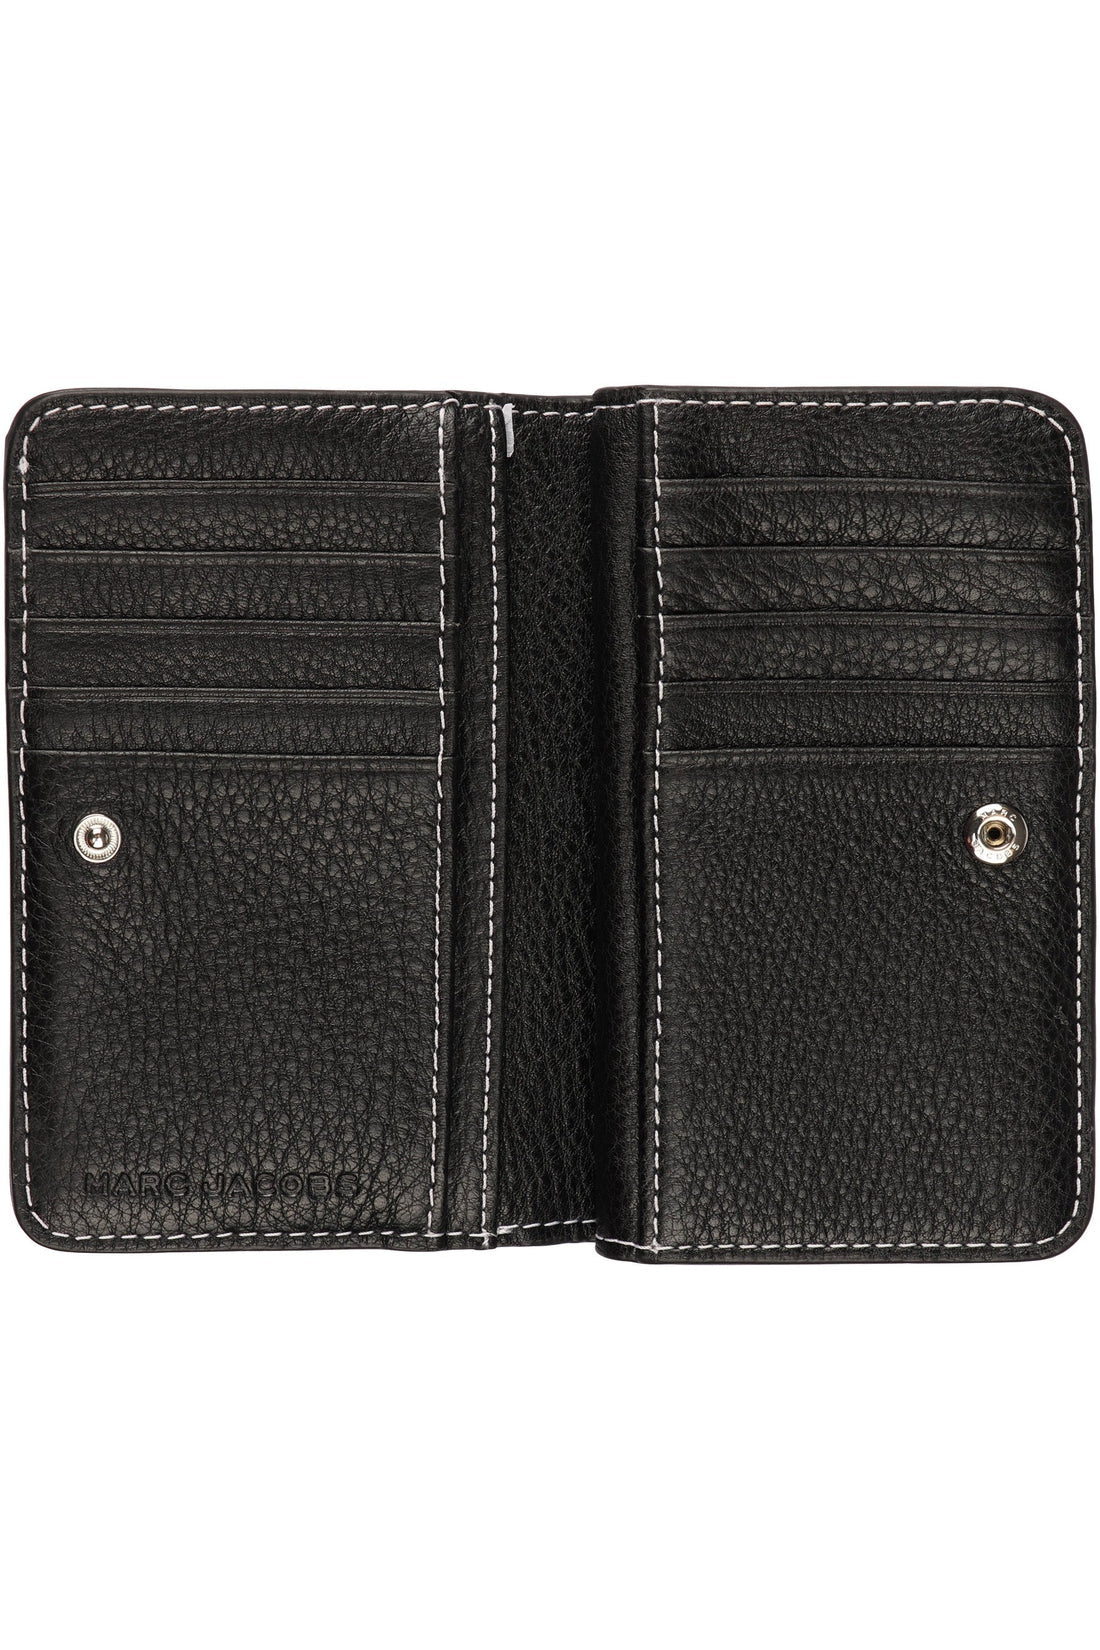 Marc Jacobs-OUTLET-SALE-Tag leather wallet-ARCHIVIST